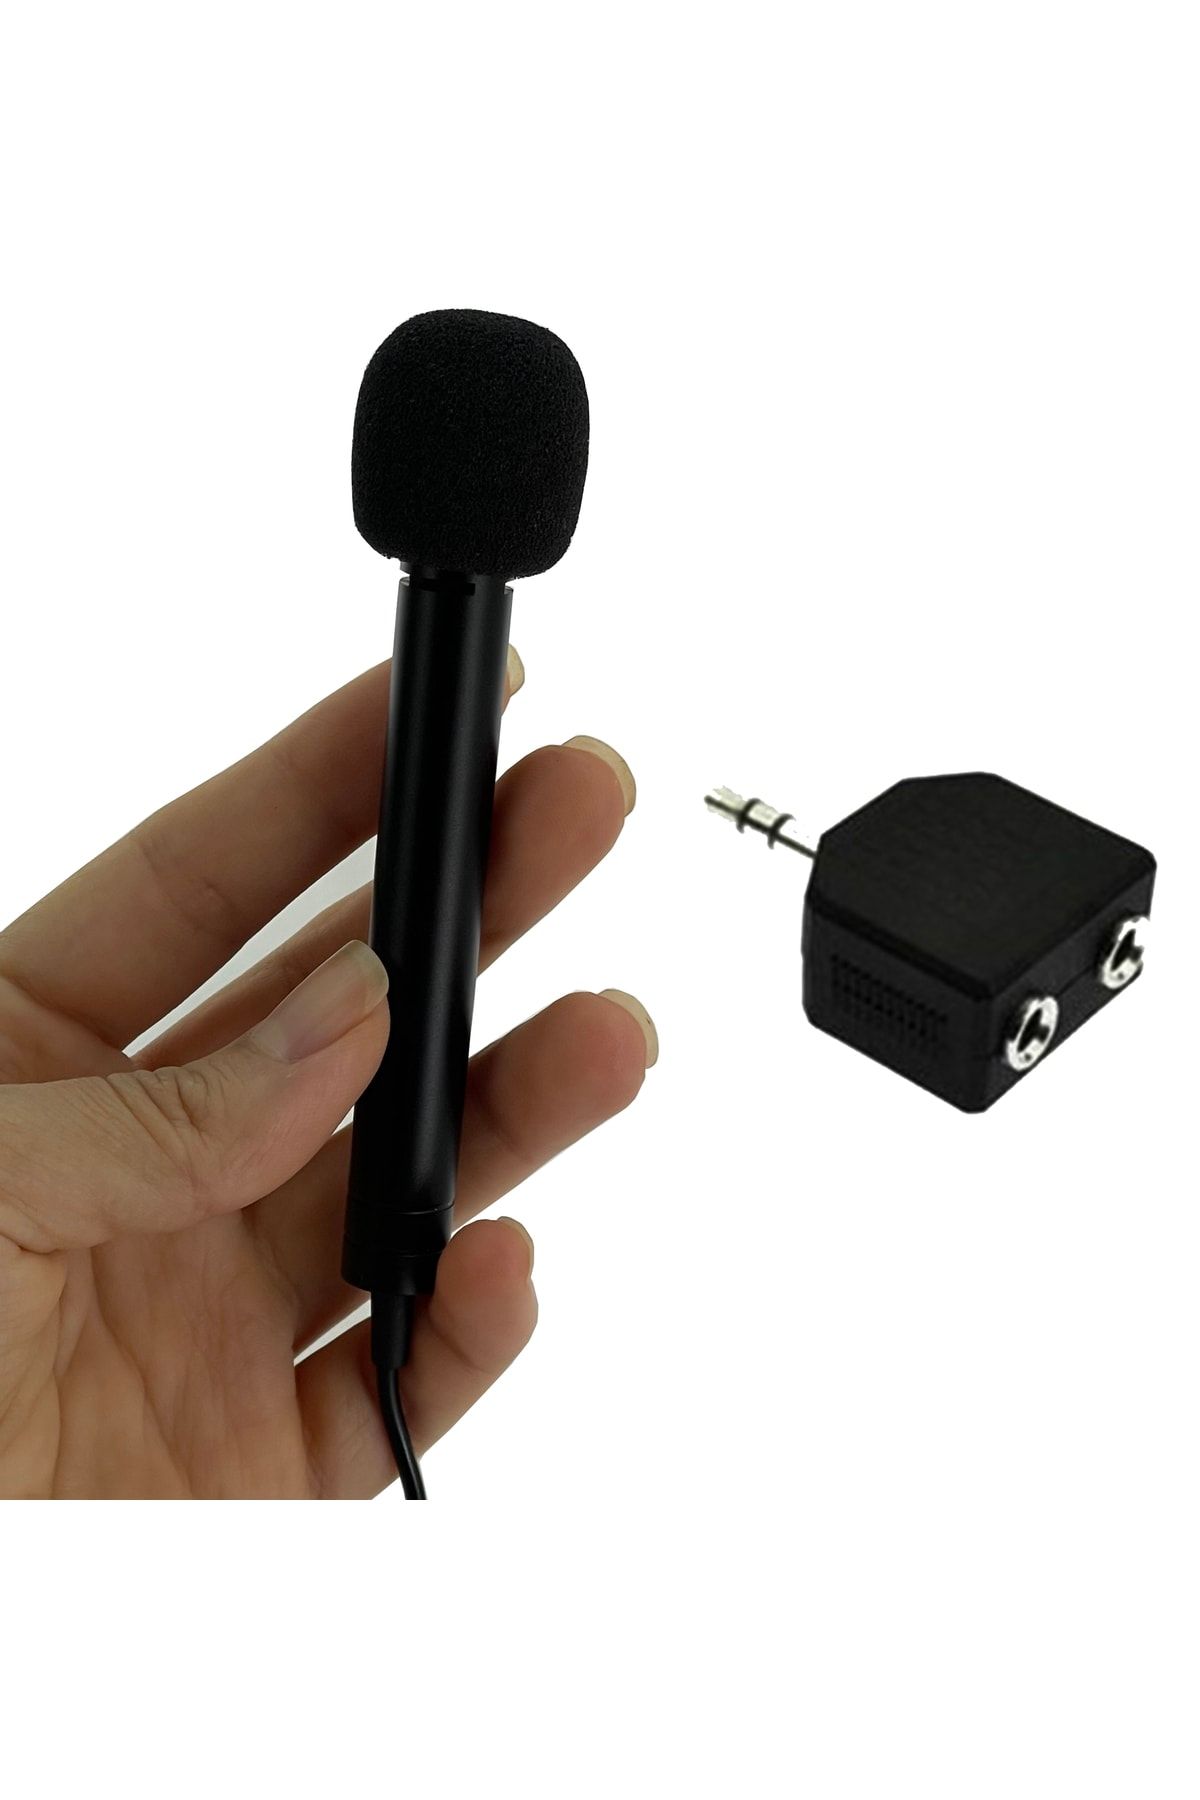 Coverzone Mini El Mikrofonu Professional Röportaj Kulaklık Mikrofon Birleştirici Aparatlı Mini El Mikrofonu